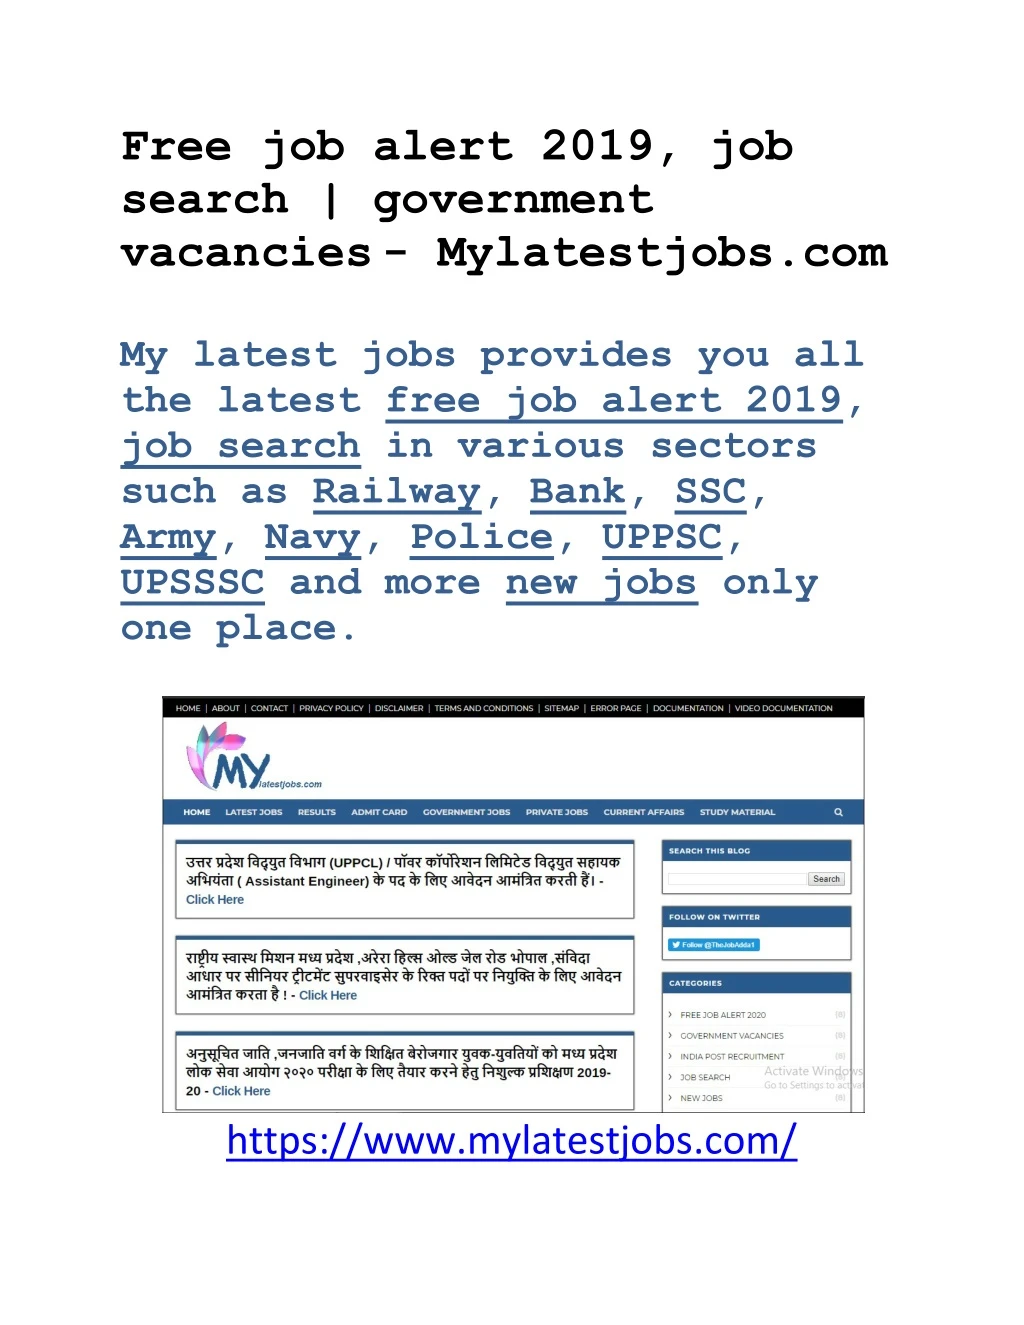 free job alert 2019 job search government